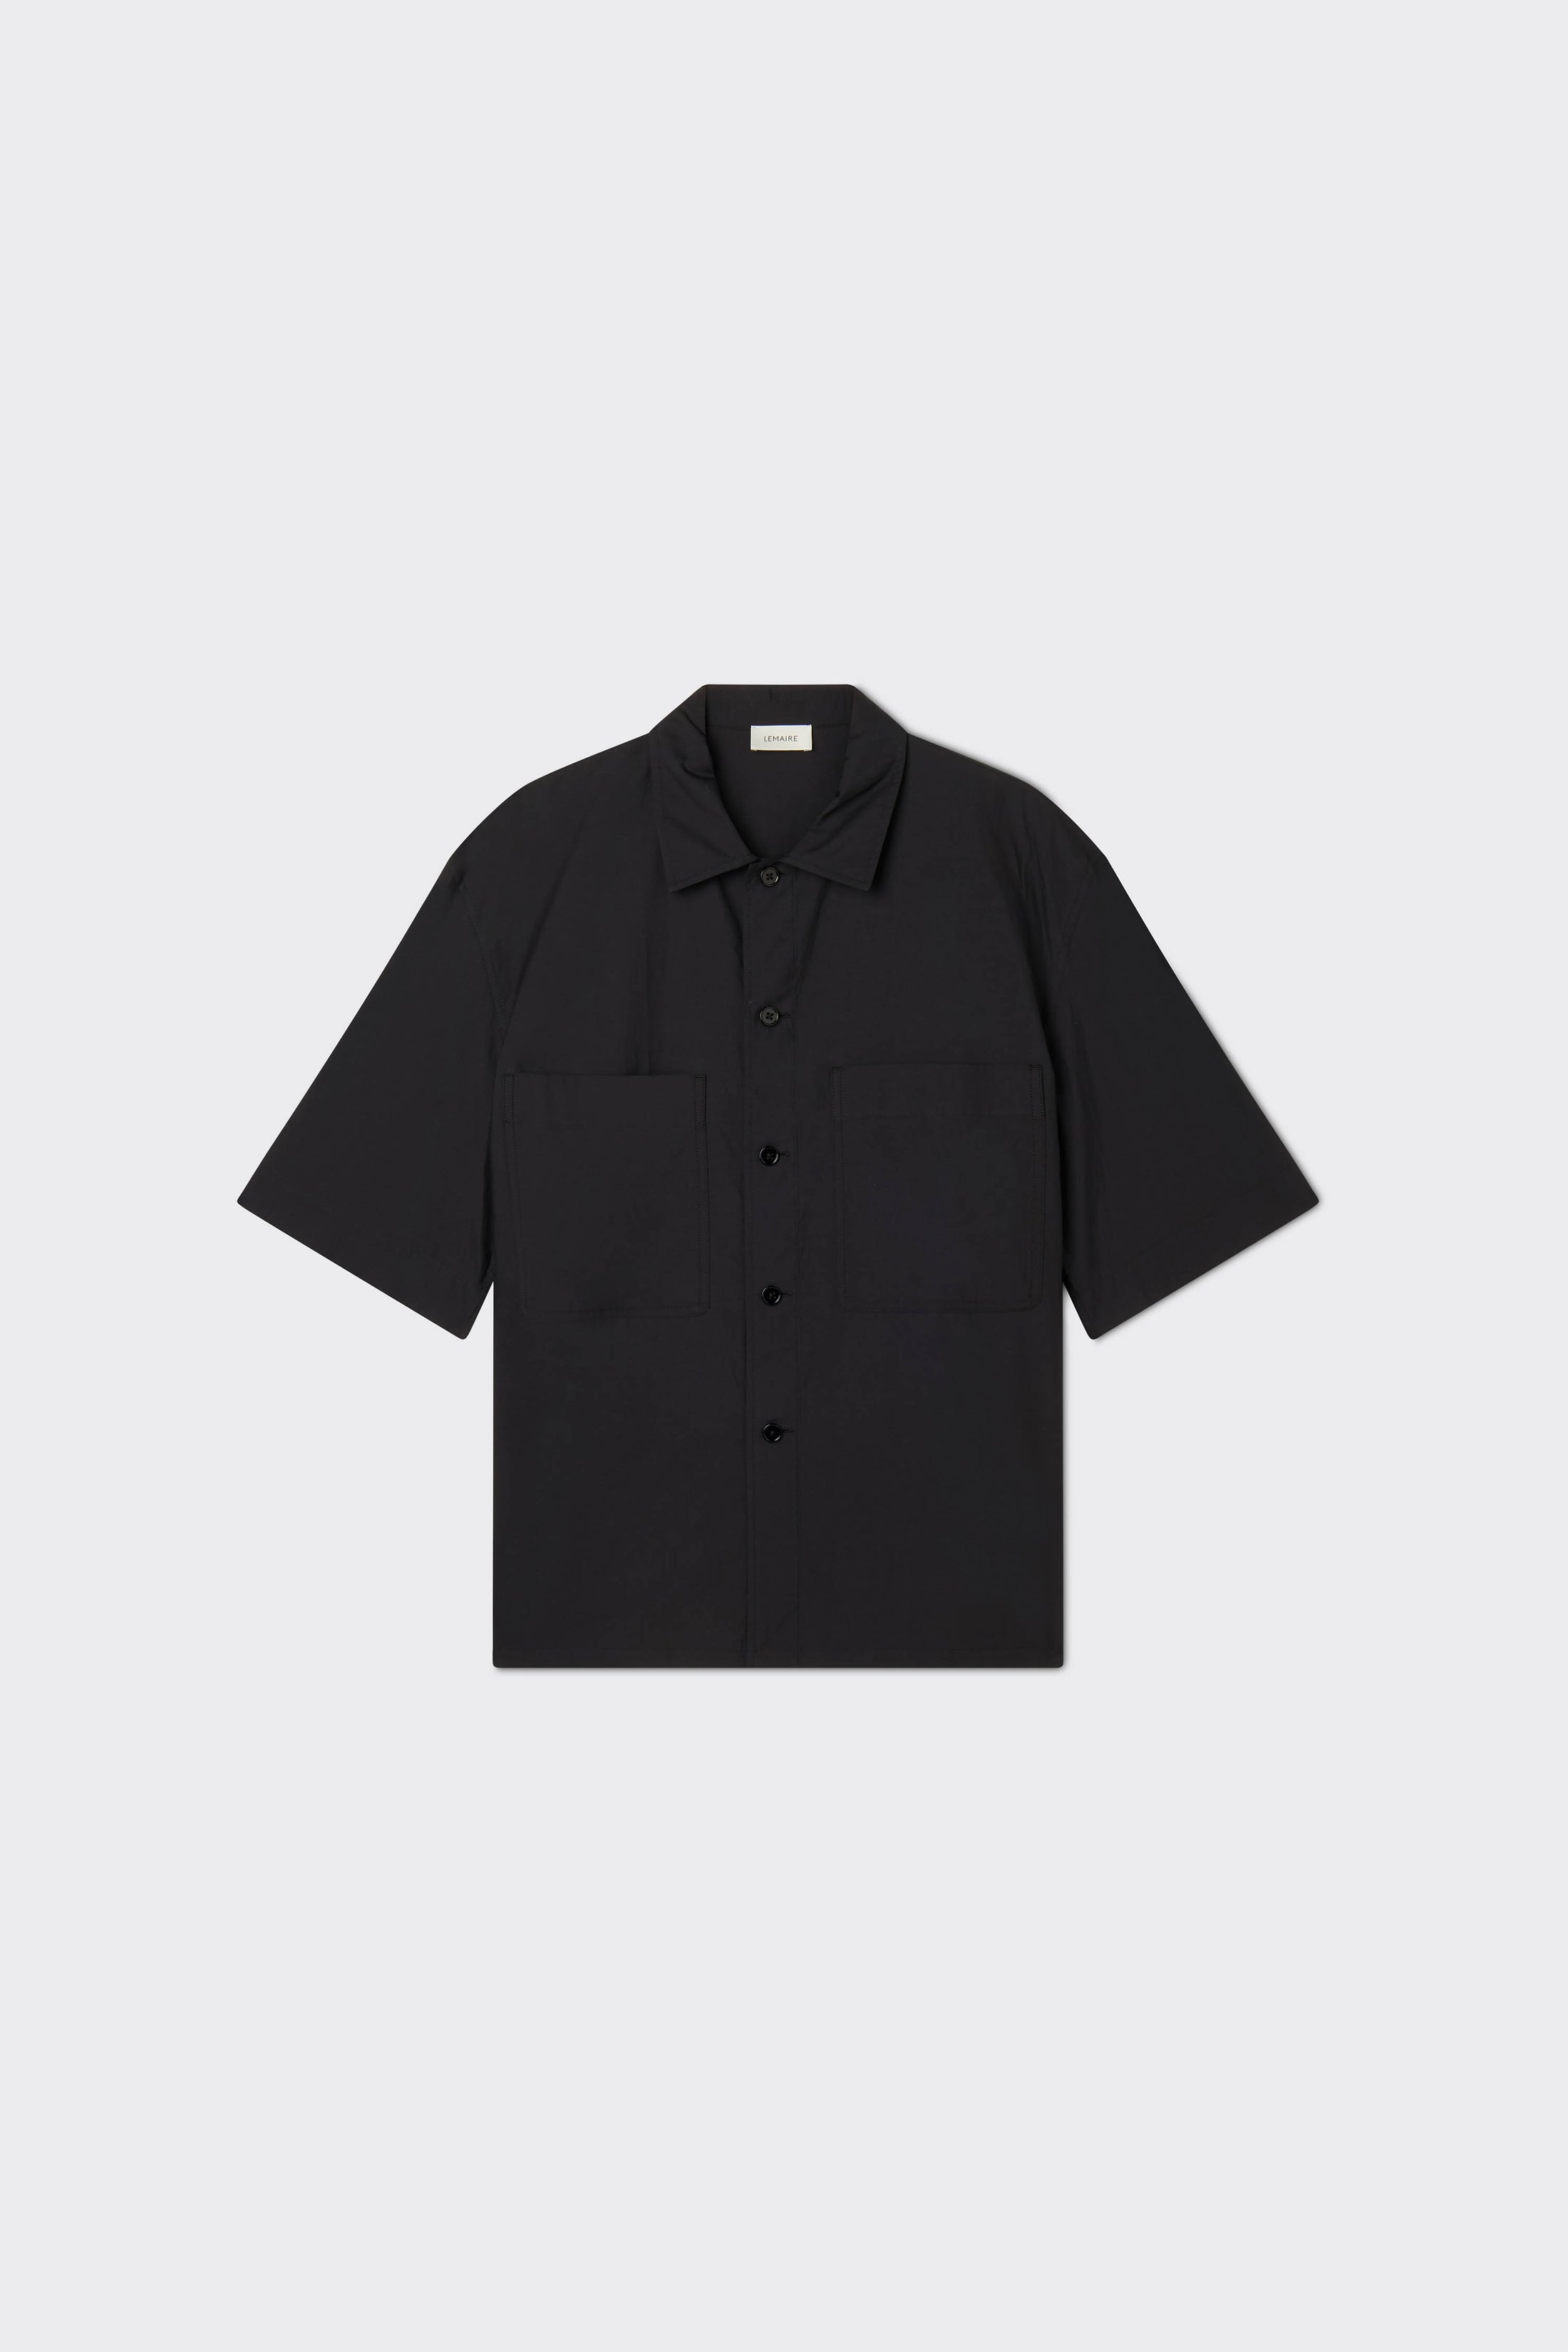 Black Cashmere T-Shirt